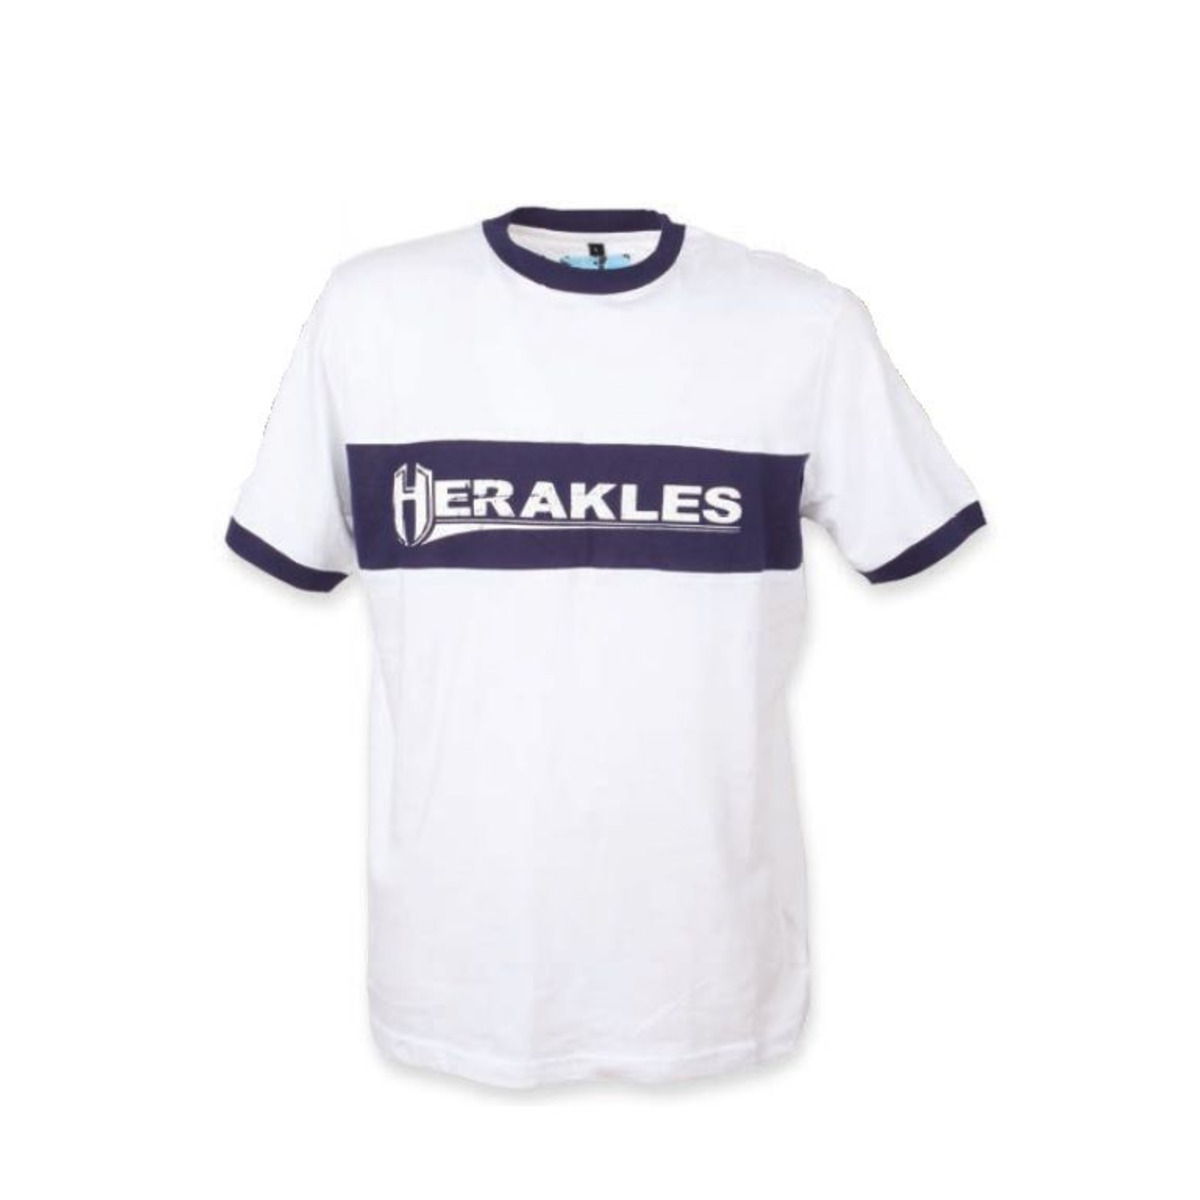 Herakles White-Blue T-Shirt - 2XL